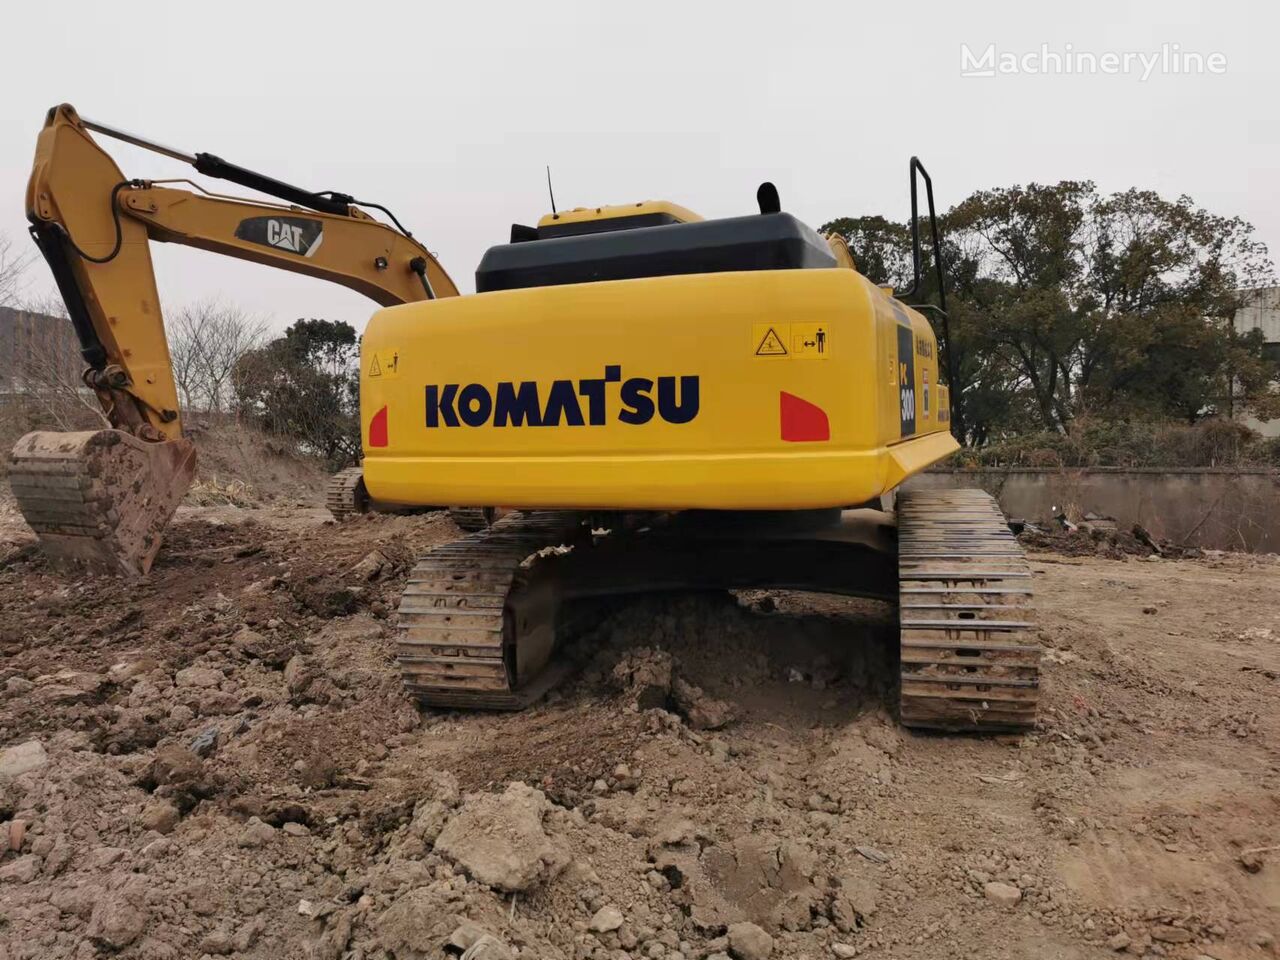 Komatsu PC270-7 tracked excavator